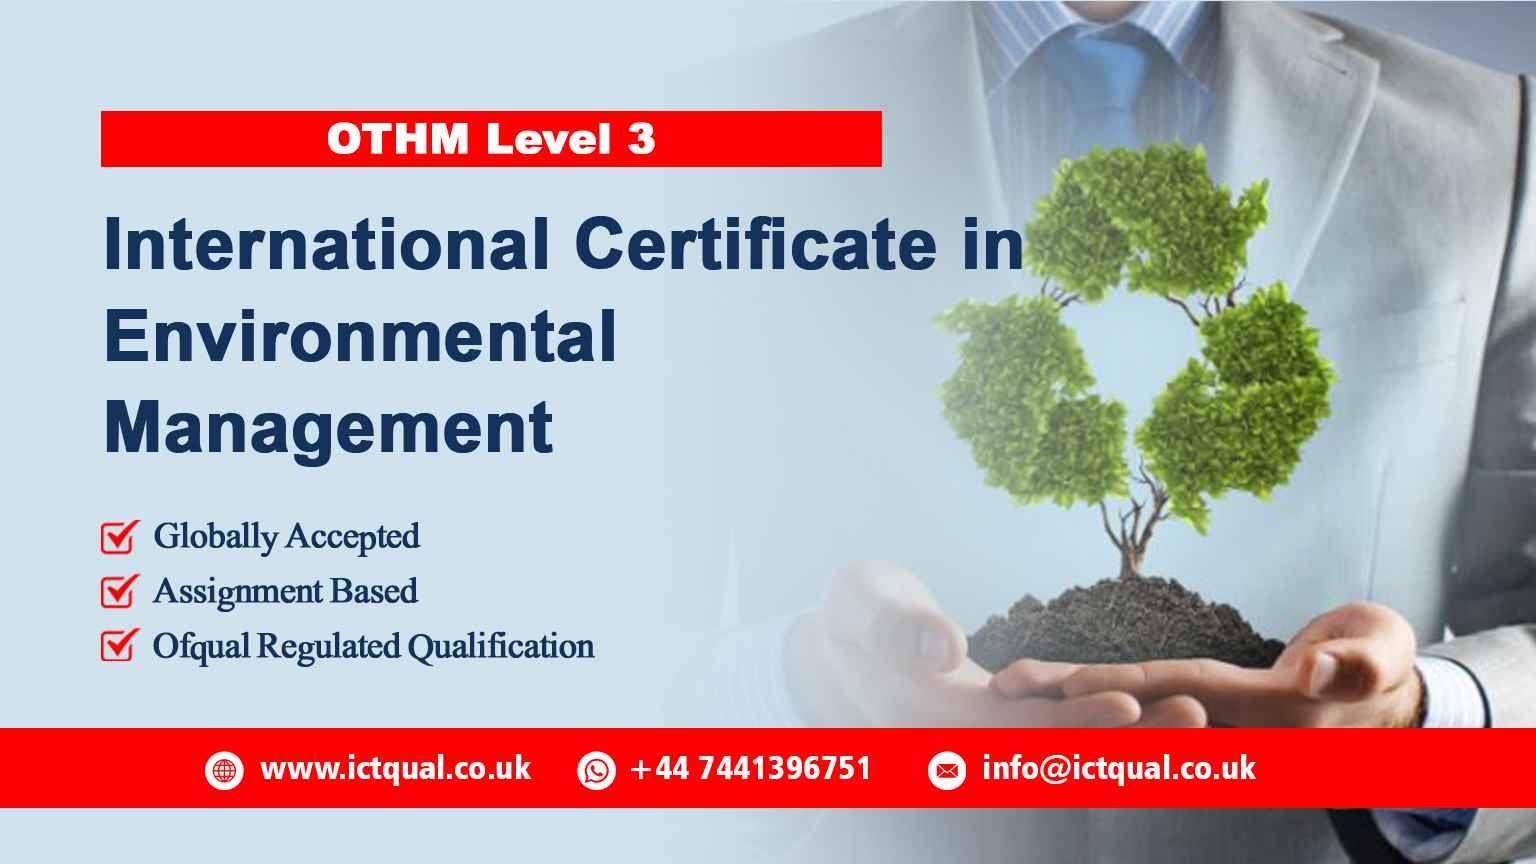 OTHM Level 3 International Certificate in Environmental Management